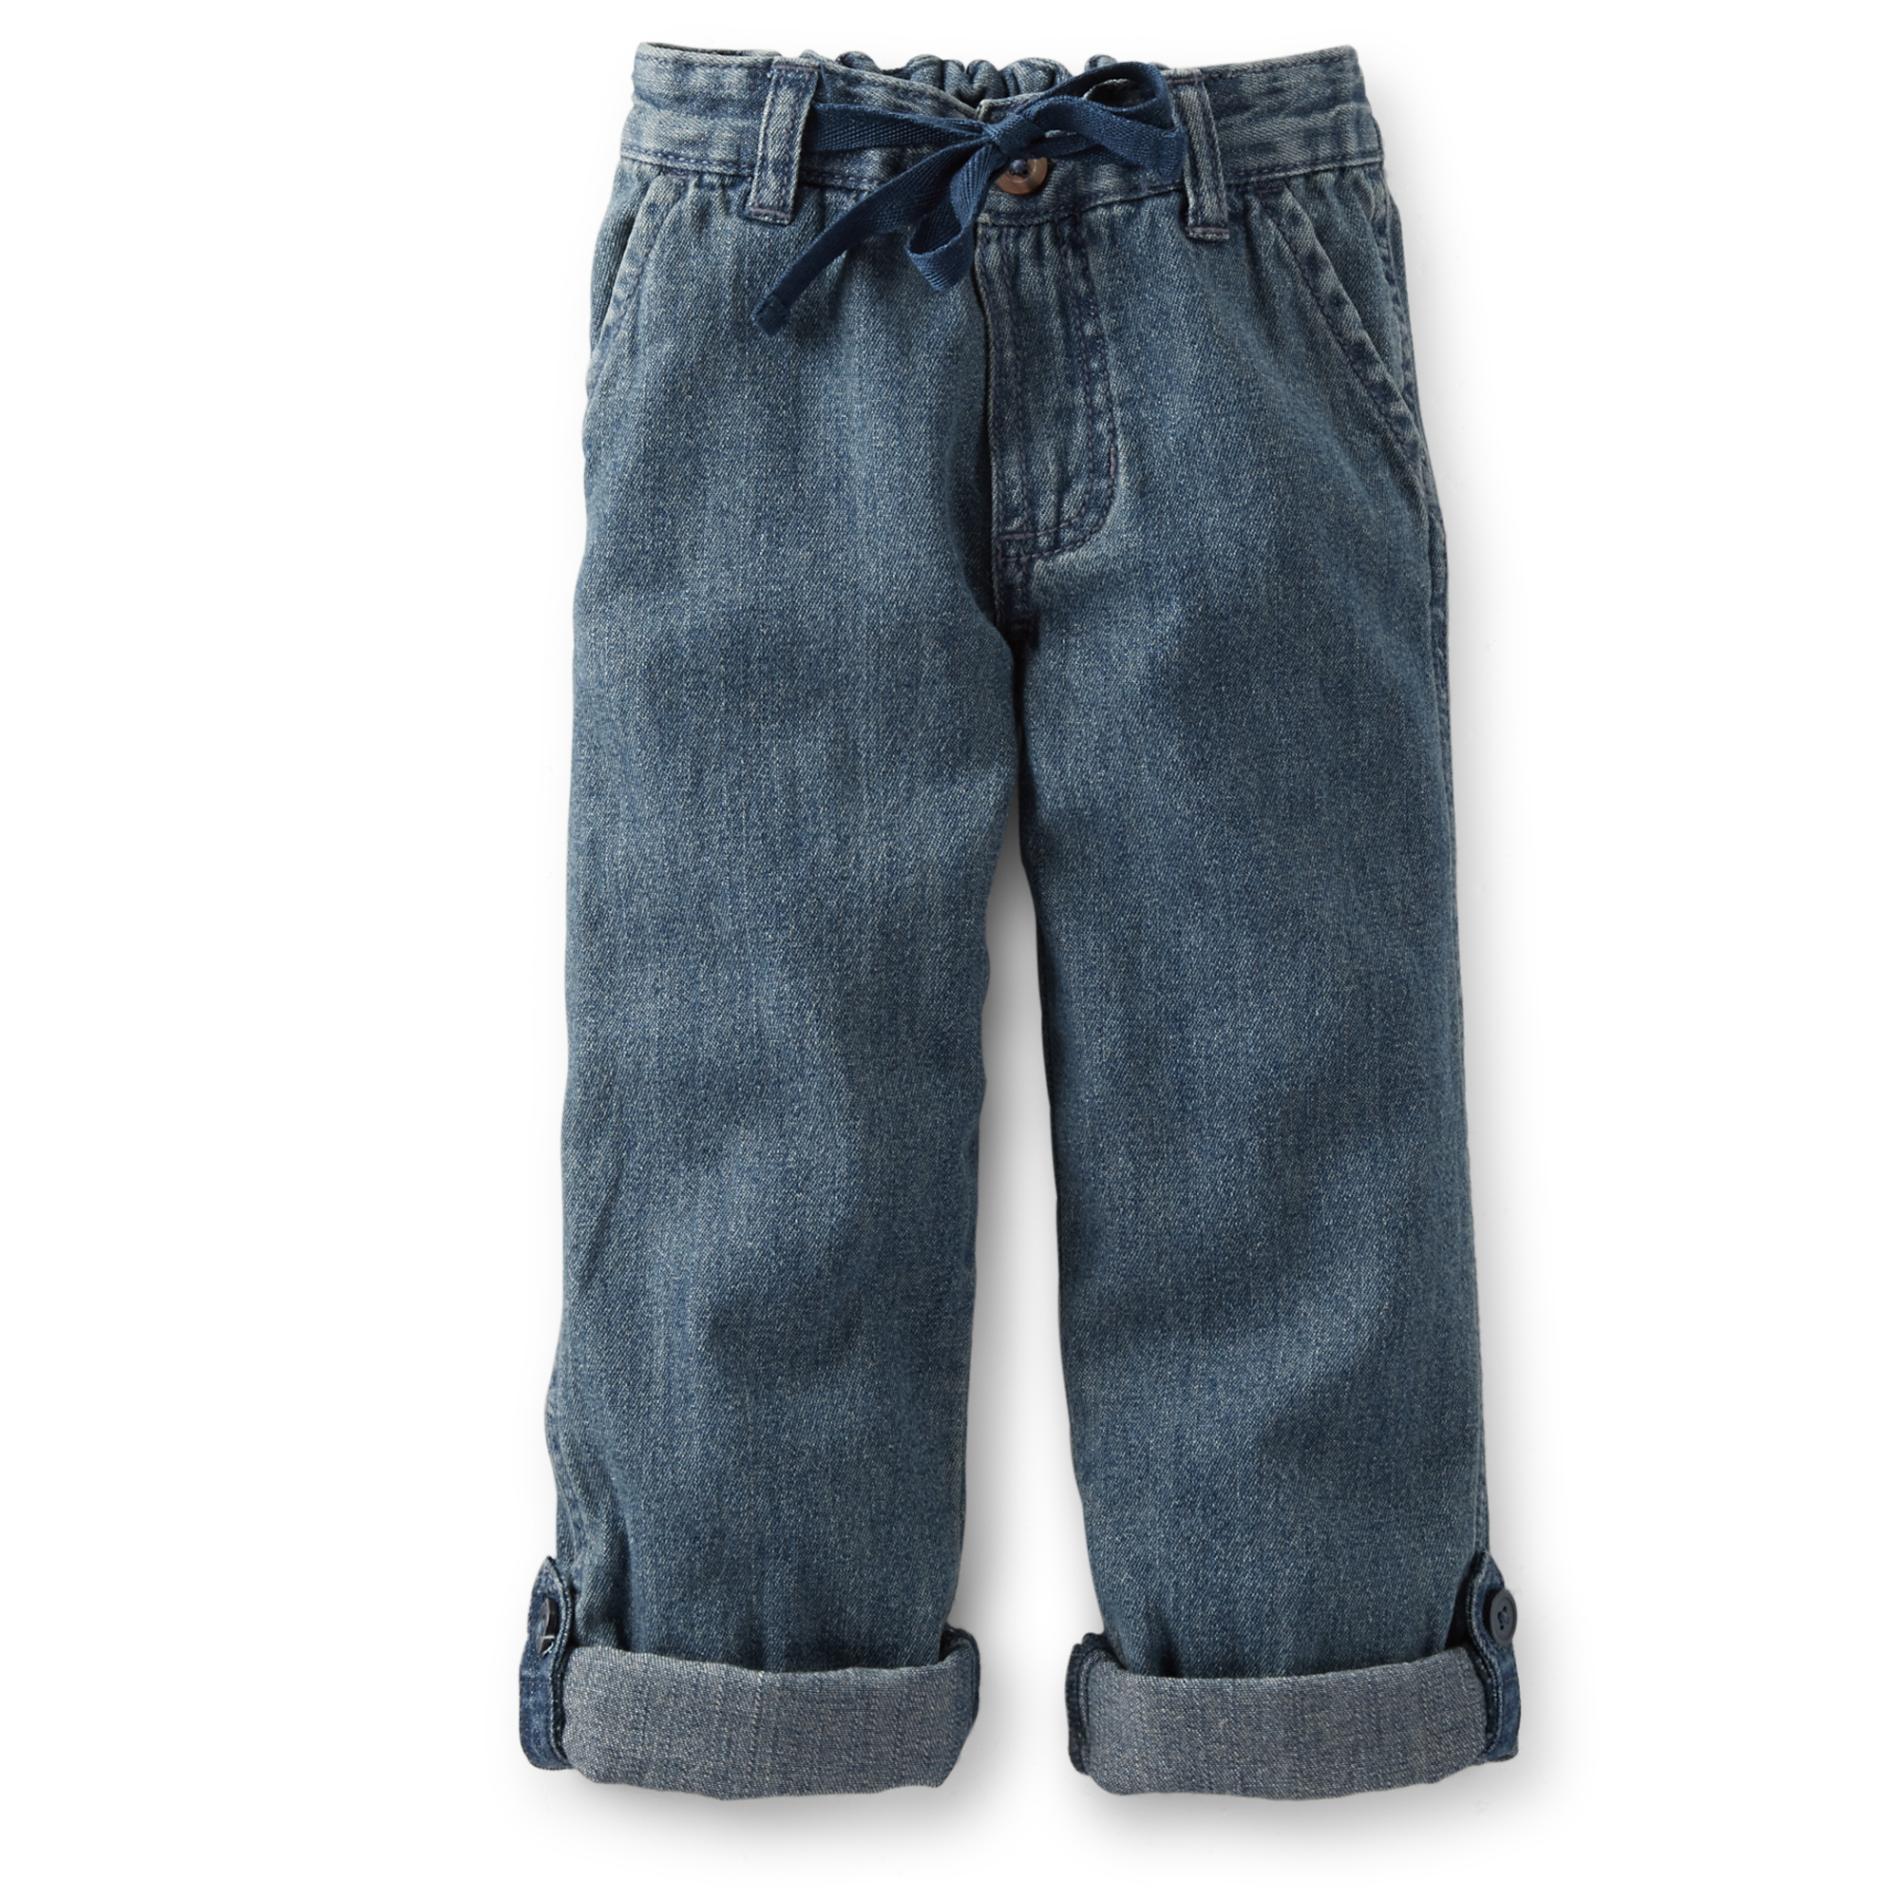 Carter's Girl's Roll Cuff Denim Jeans